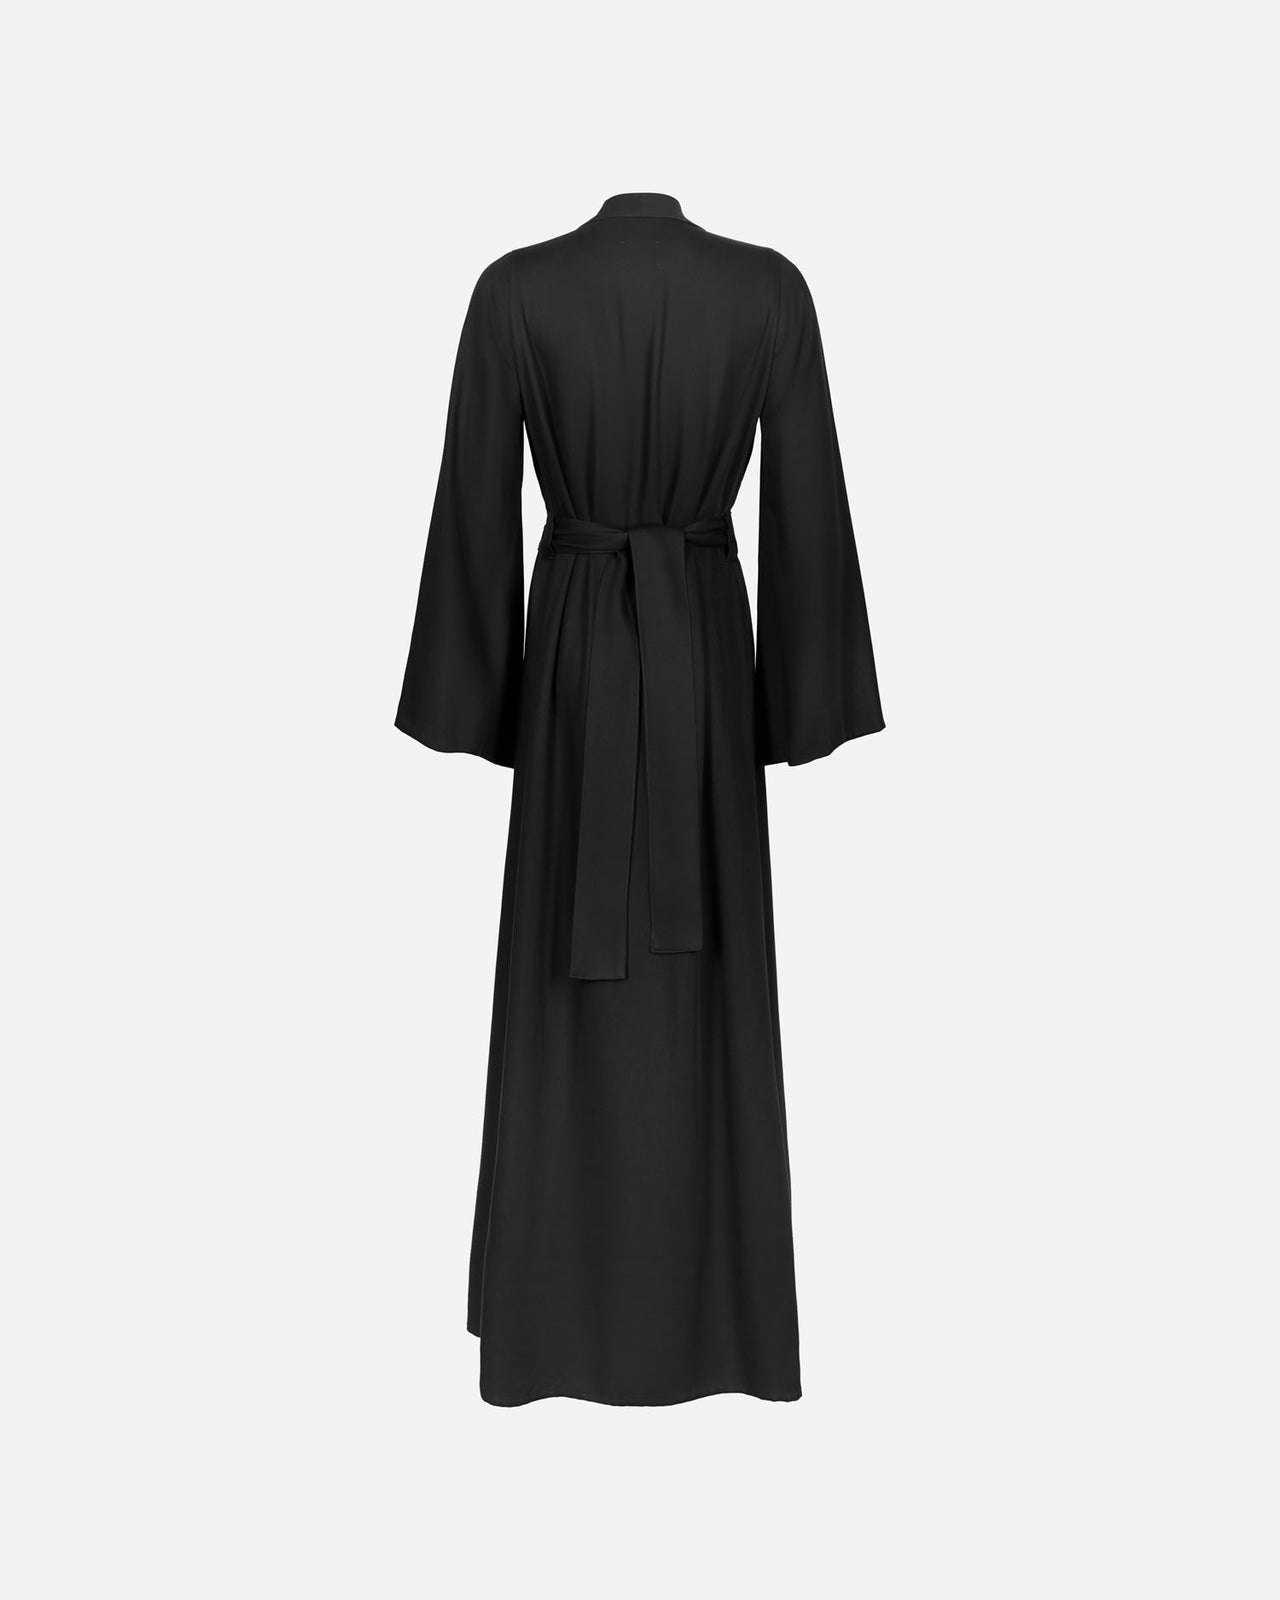 Alecto - Dress - Black